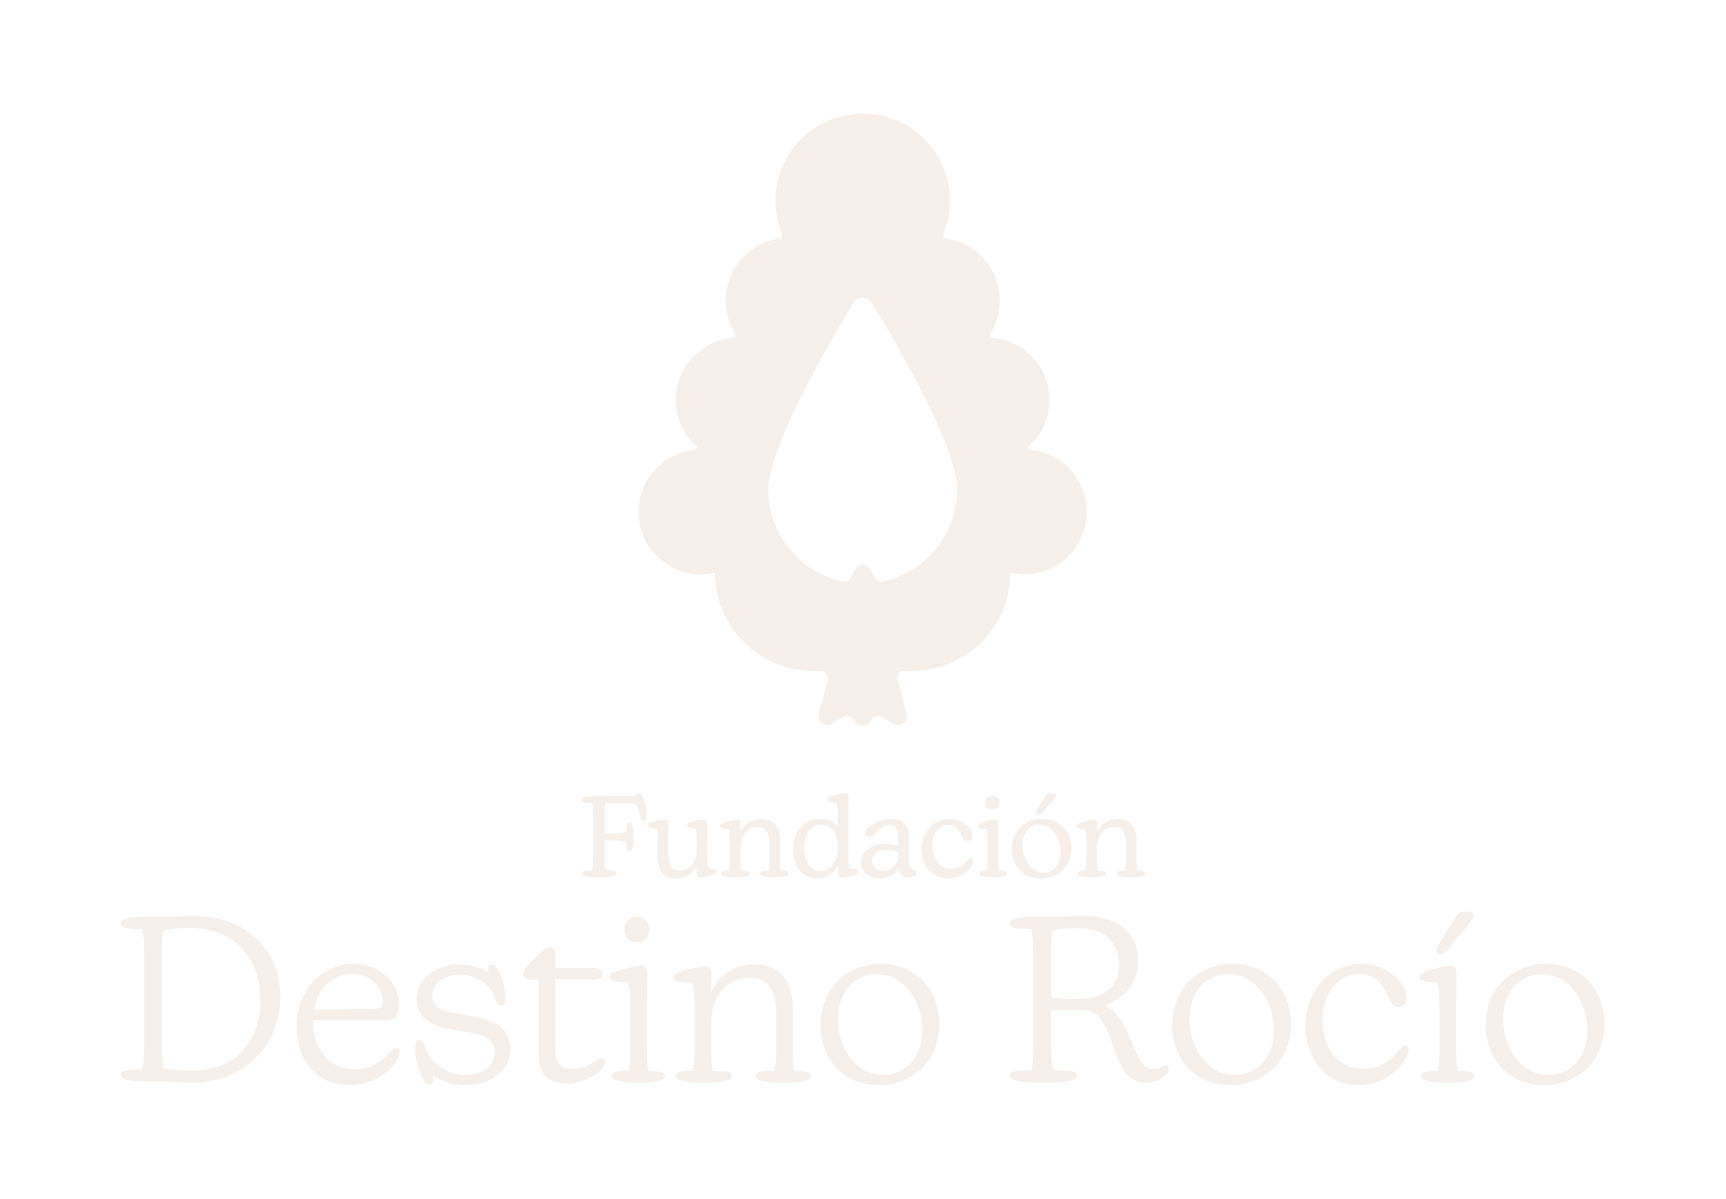 Fundacion Destino Rocio Sin Claim Vertical RGB Negativo